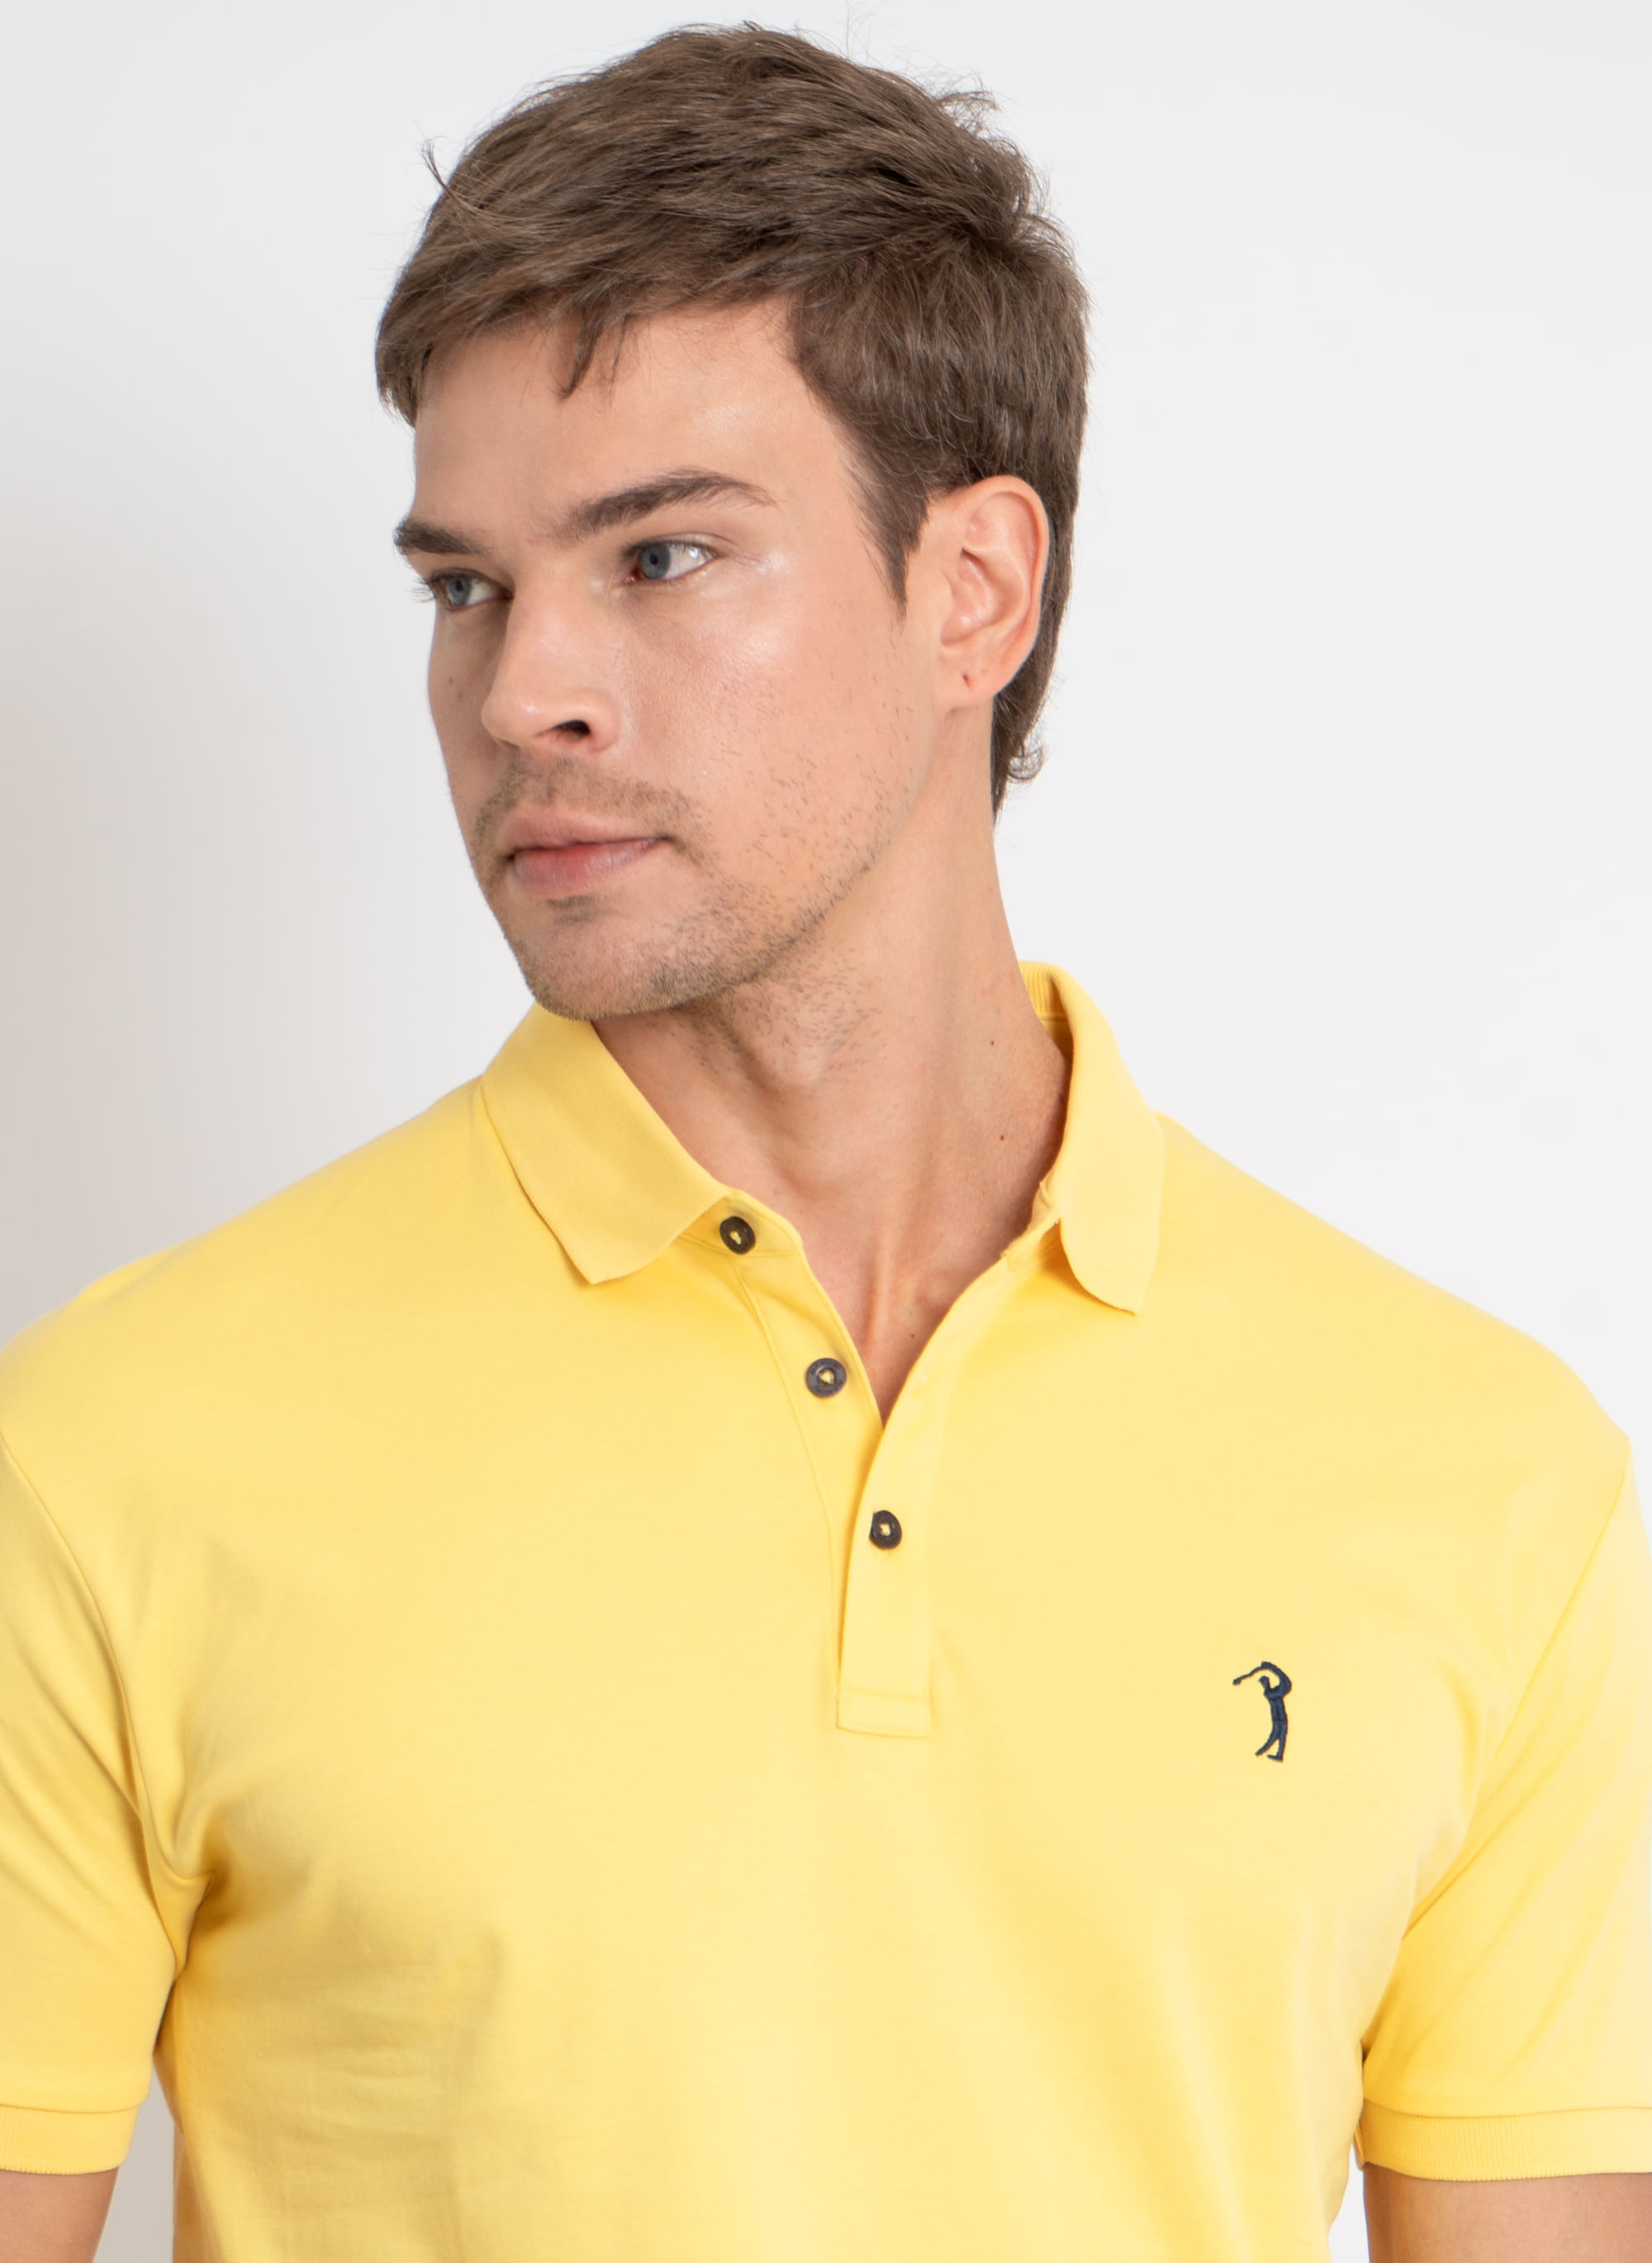 Camisa-Polo-Aleatory-Lisa-Algodao-Pima-Amarela-Amarelo-P